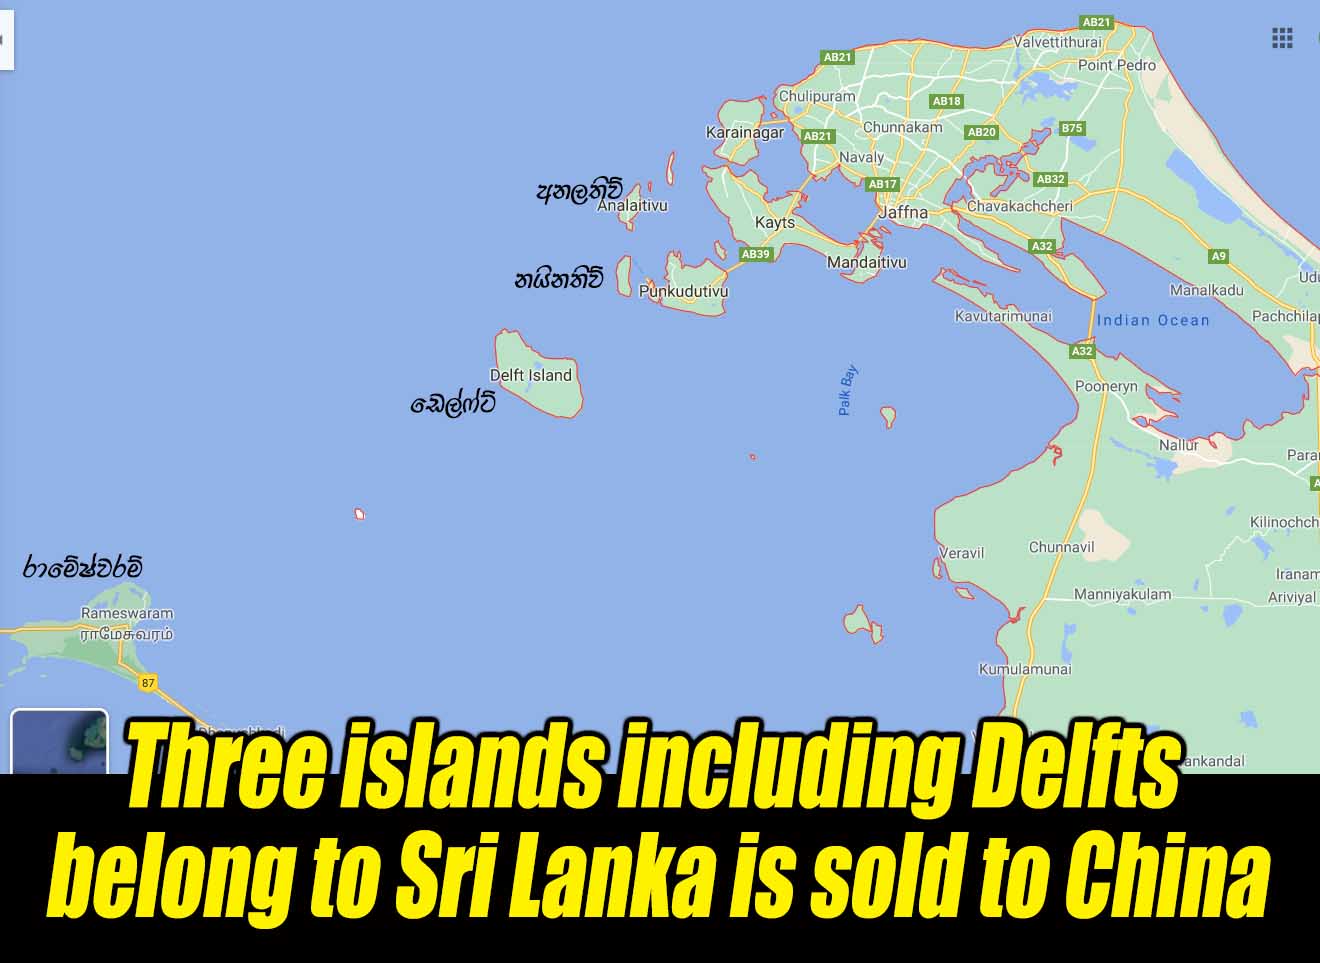 https://s3.lankaenews.com/en_news_image/Sri-lankas-3-islands-sold-to-China-E.jpg